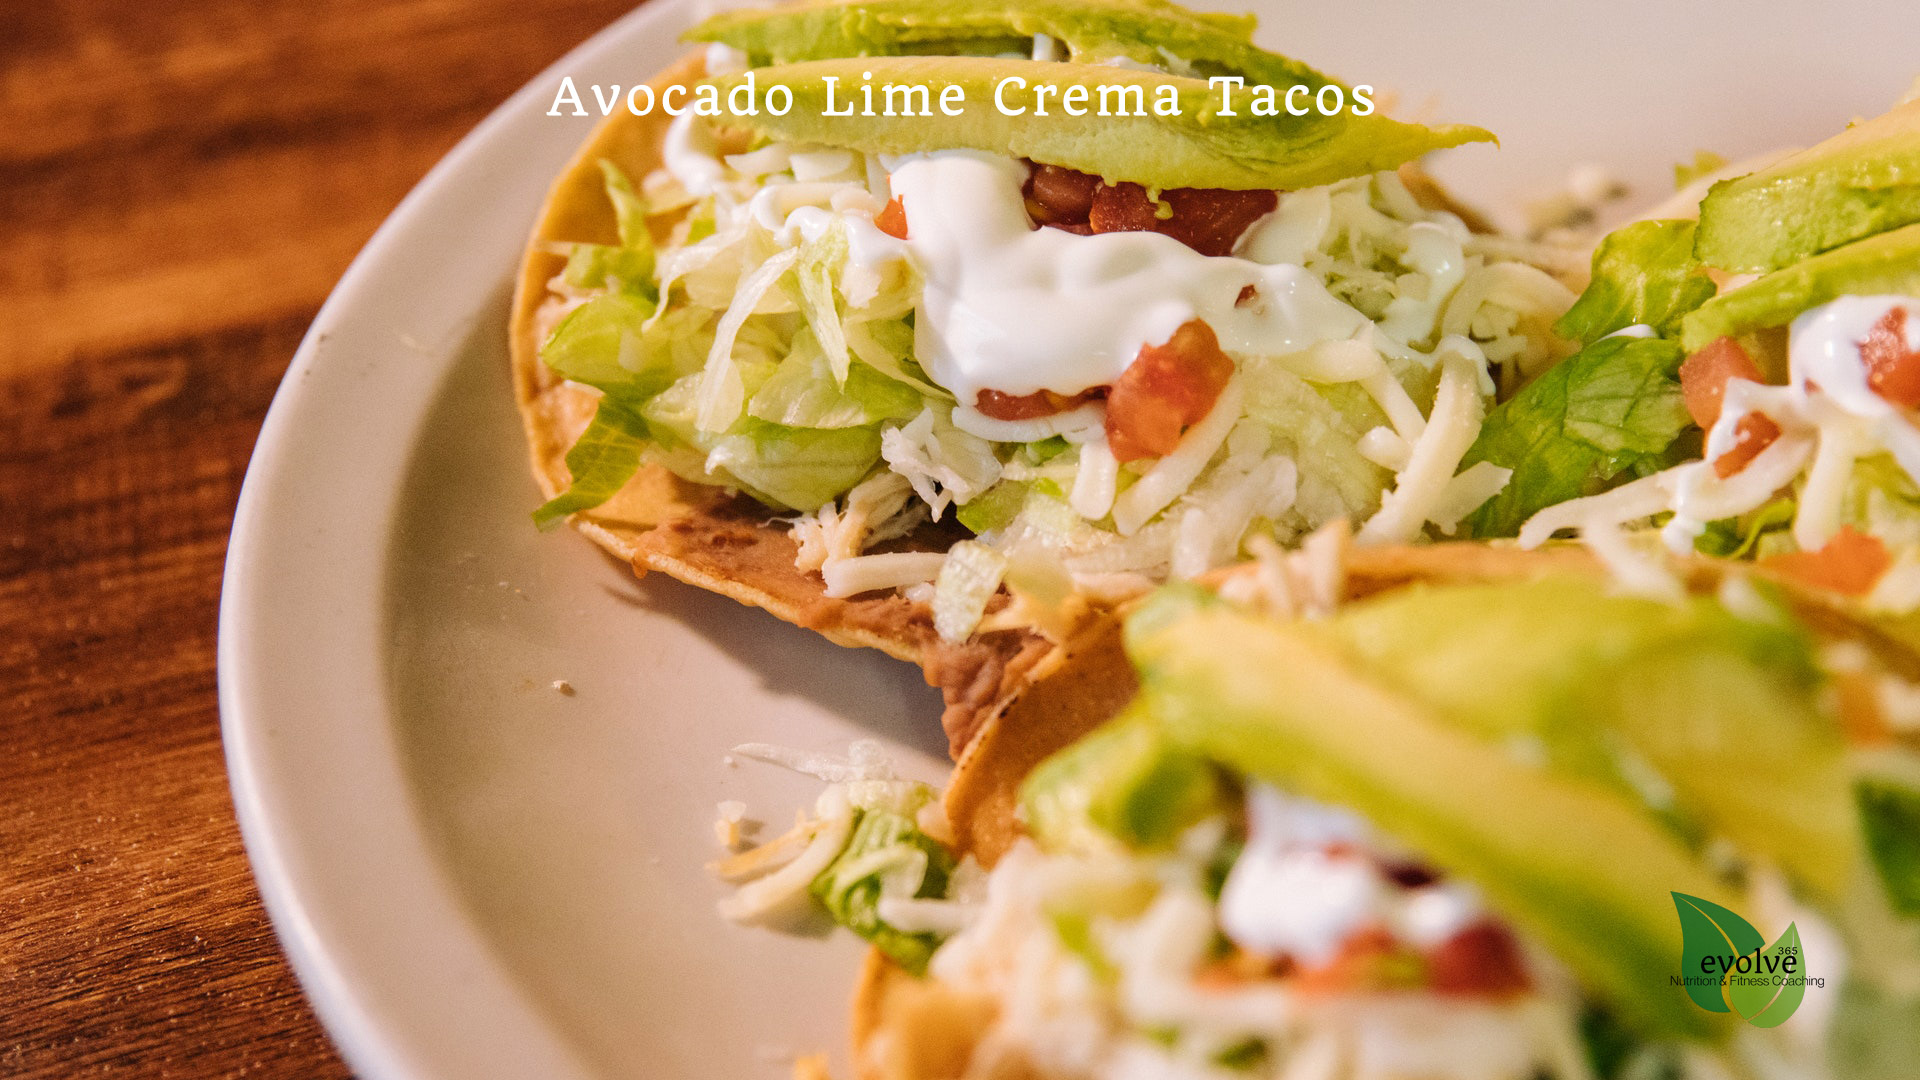 Avocado Lime Crema Tacos Featured